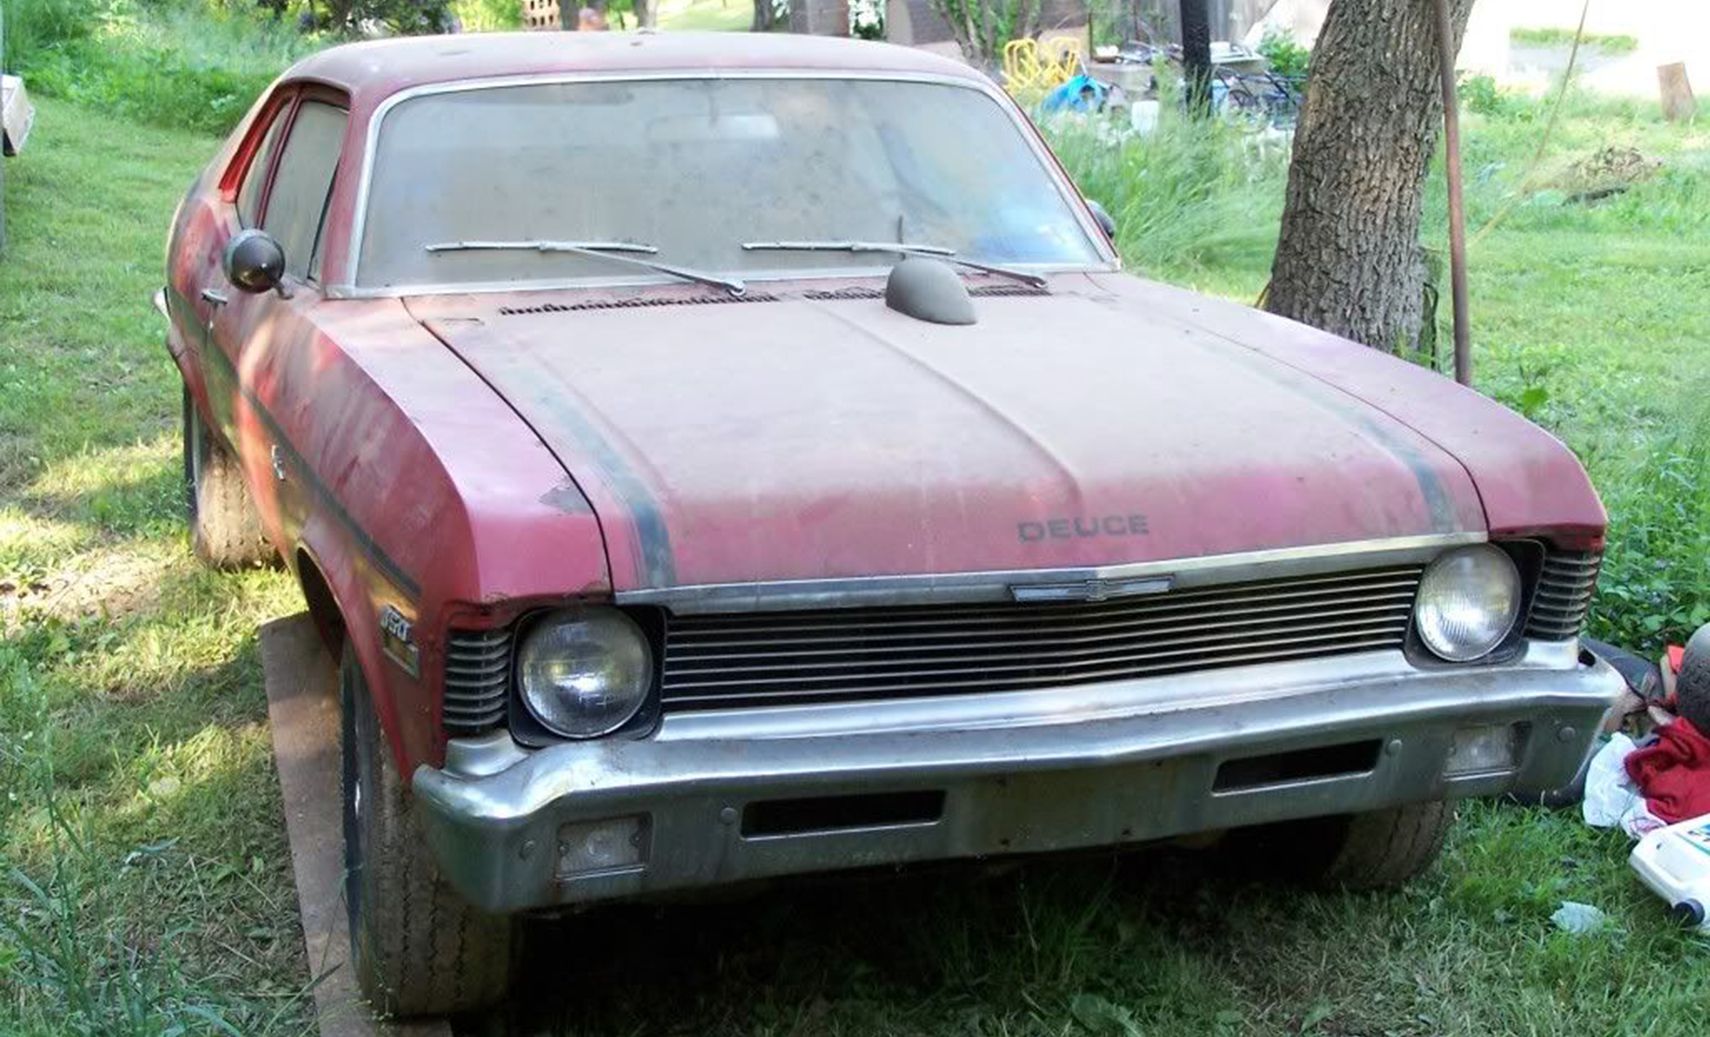 1968 Chevrolet Nova Yenko Deuce: All The More Special